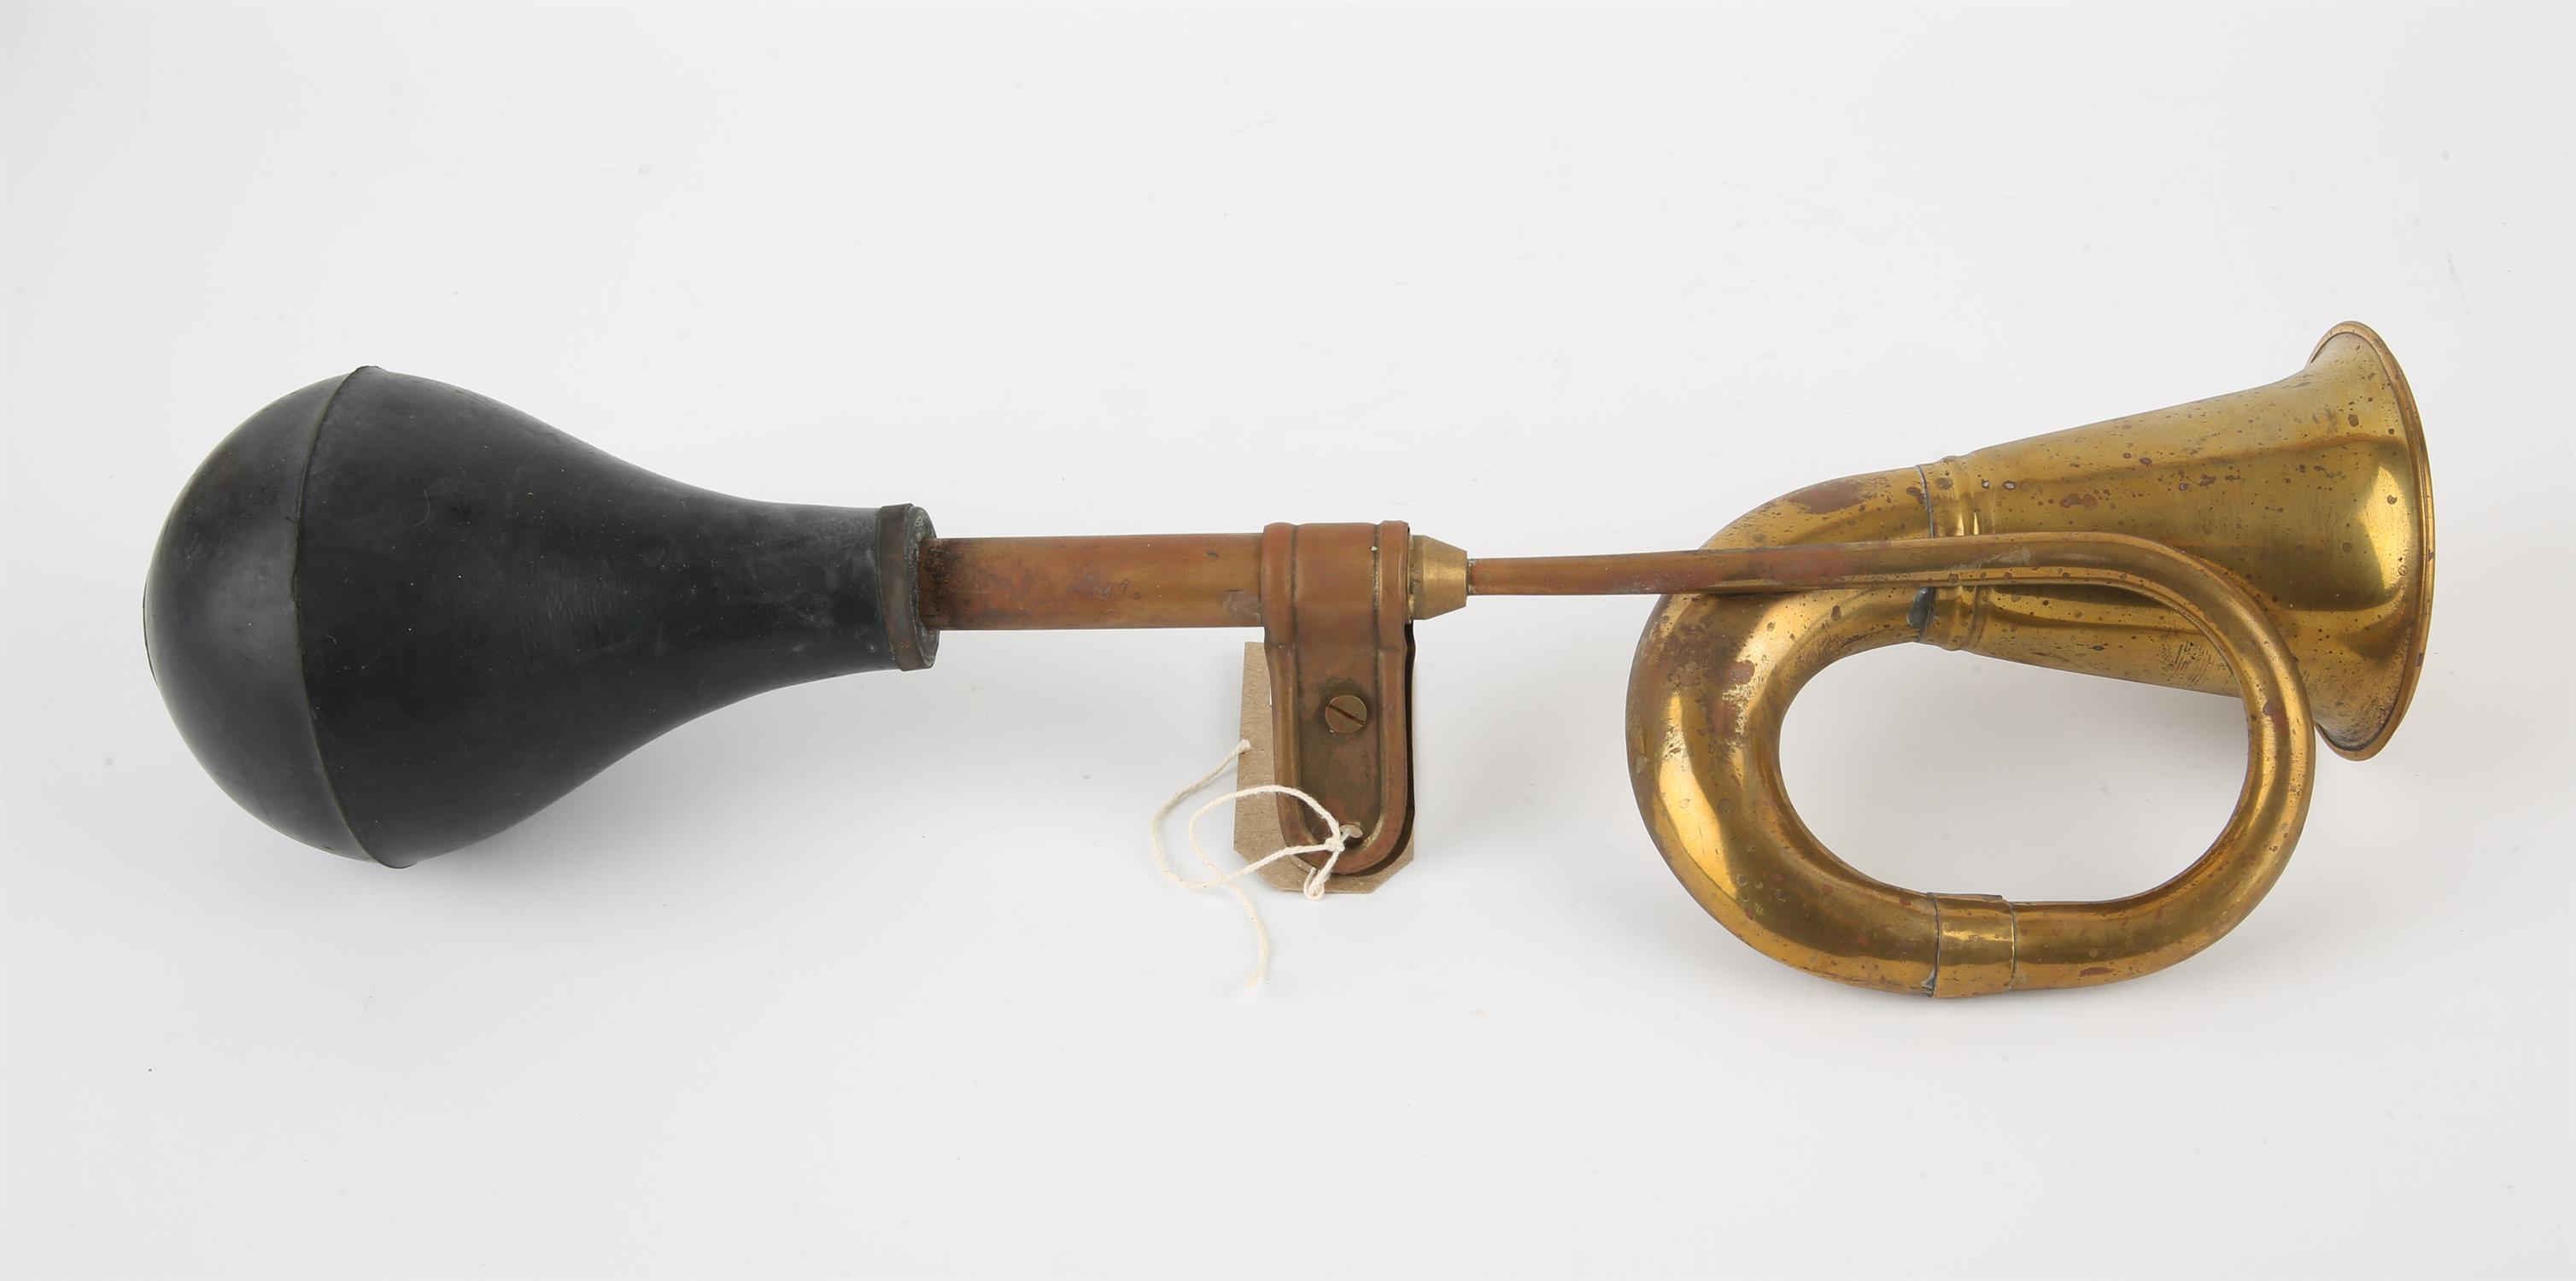 Vintage Veteran brass and rubber bulb car horn